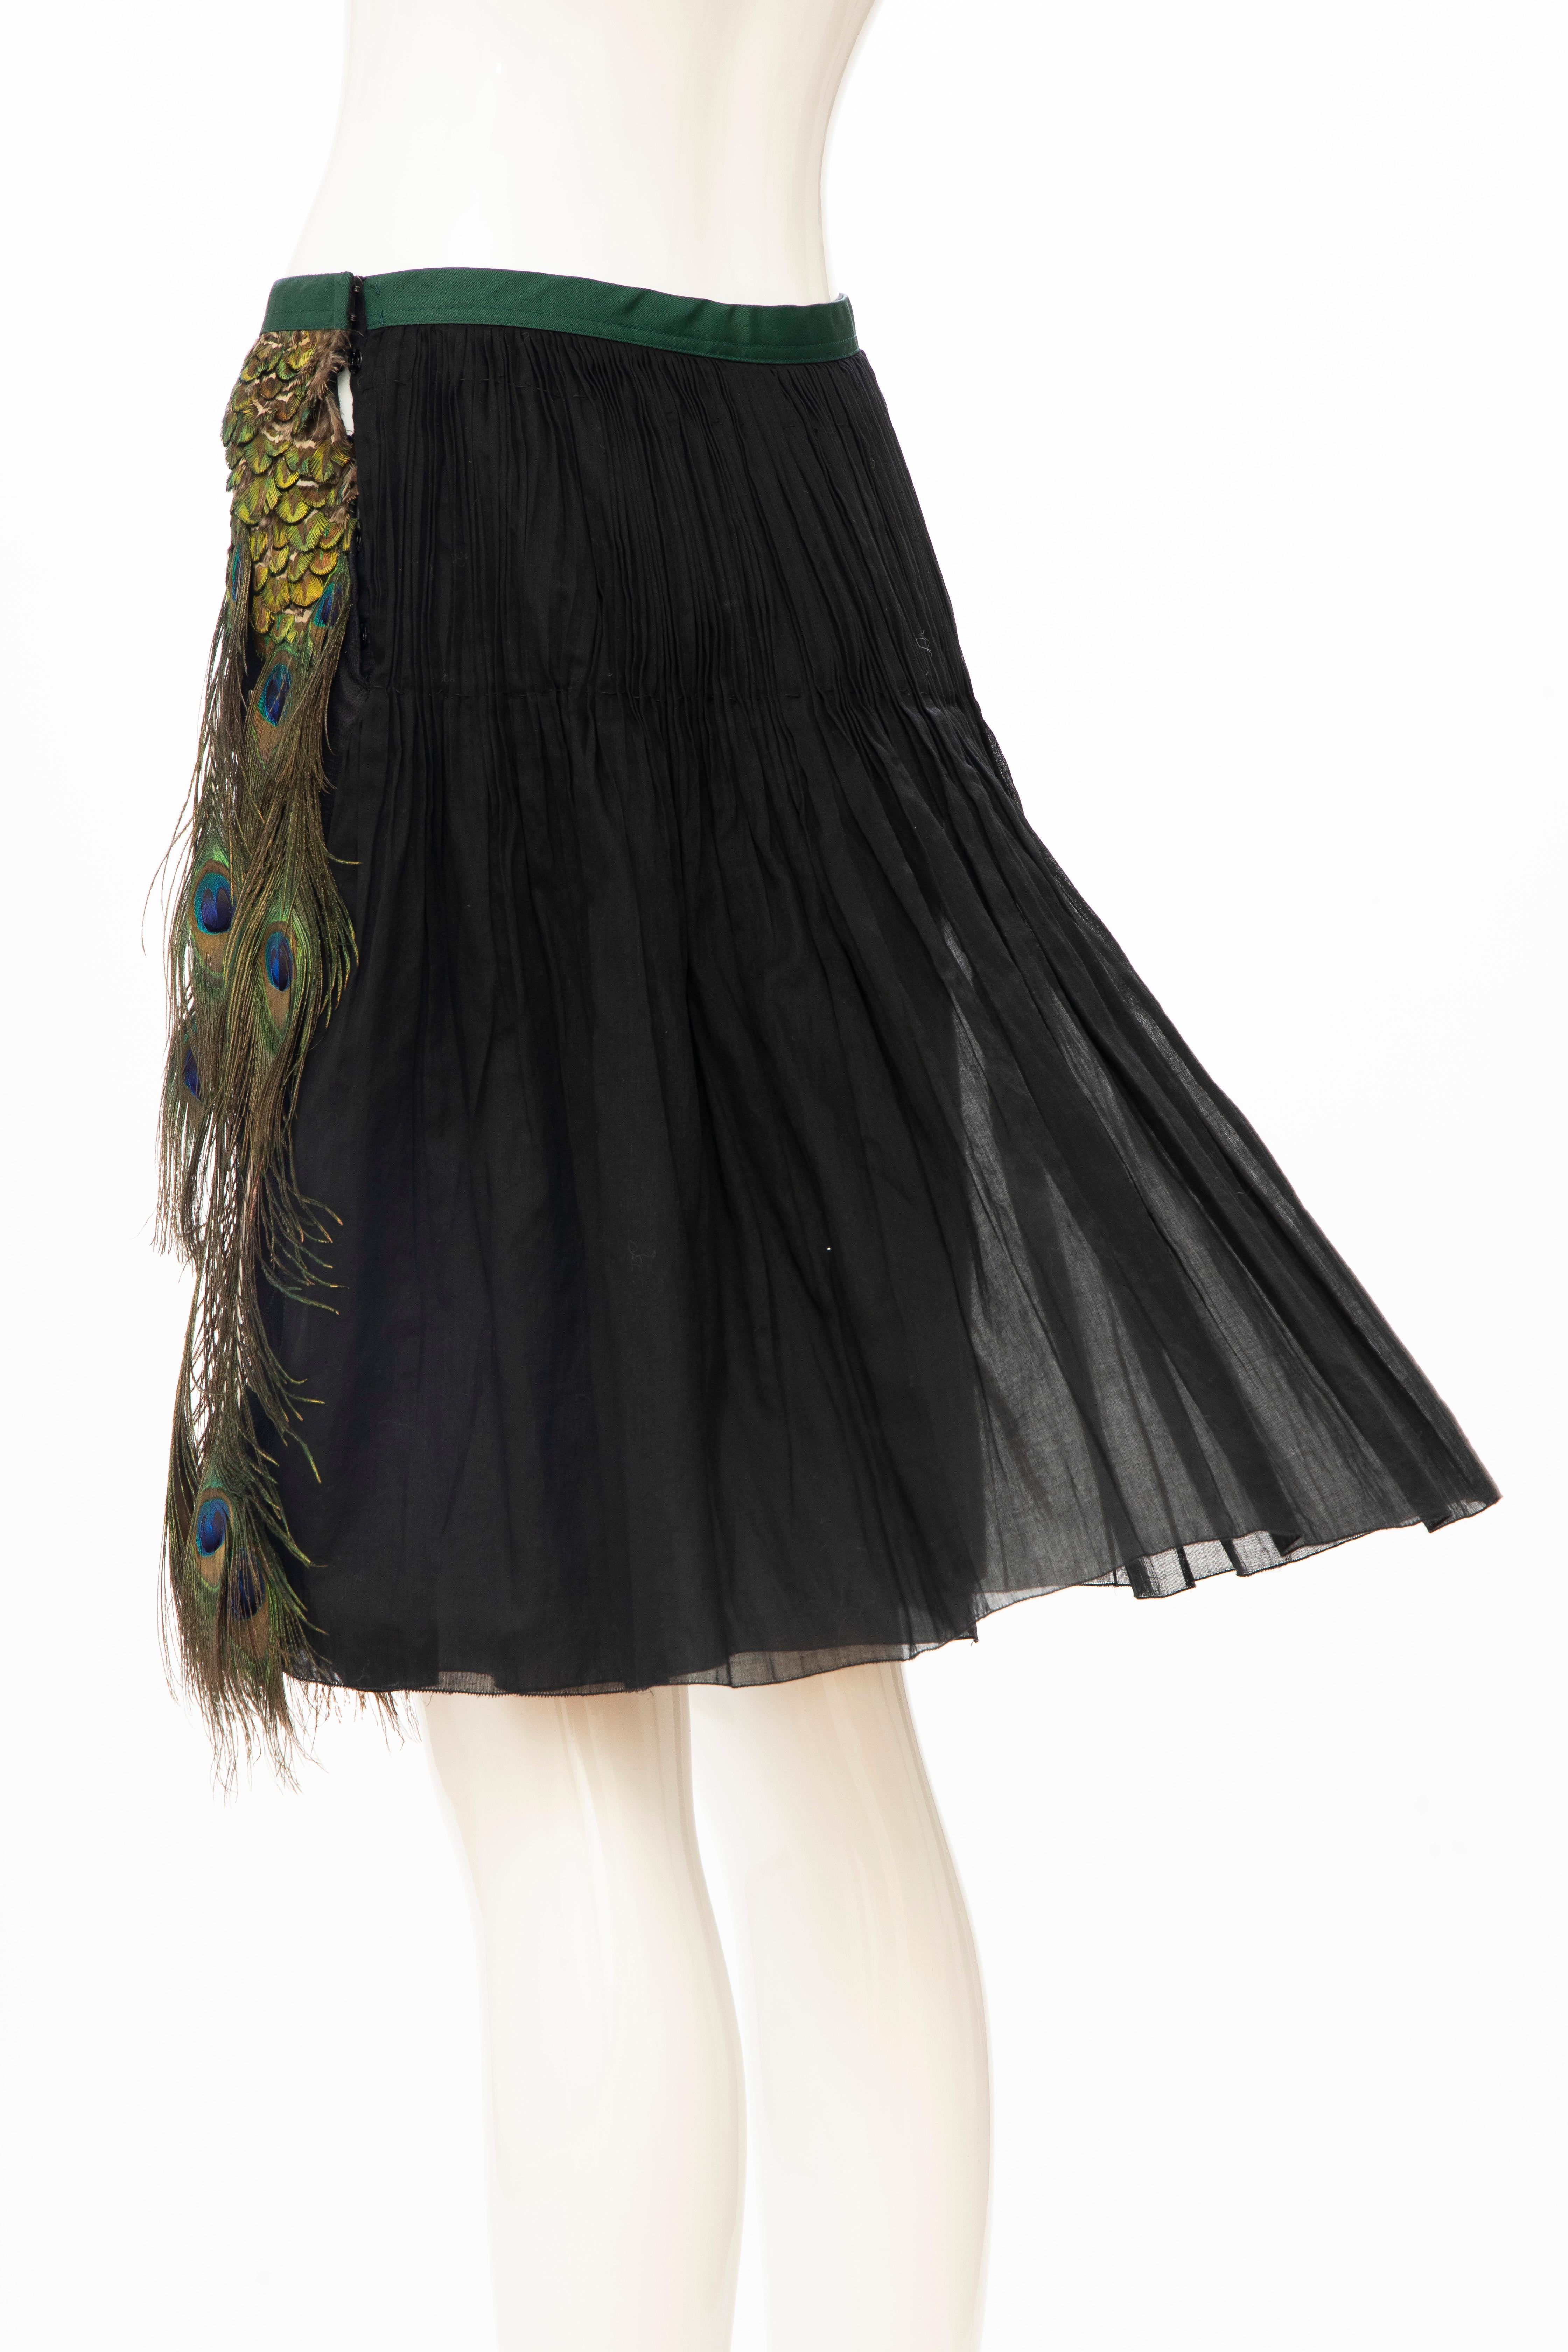 Prada Runway Black Cotton Pleated Skirt Appliquéd Peacock Feathers, Spring 2005 For Sale 2